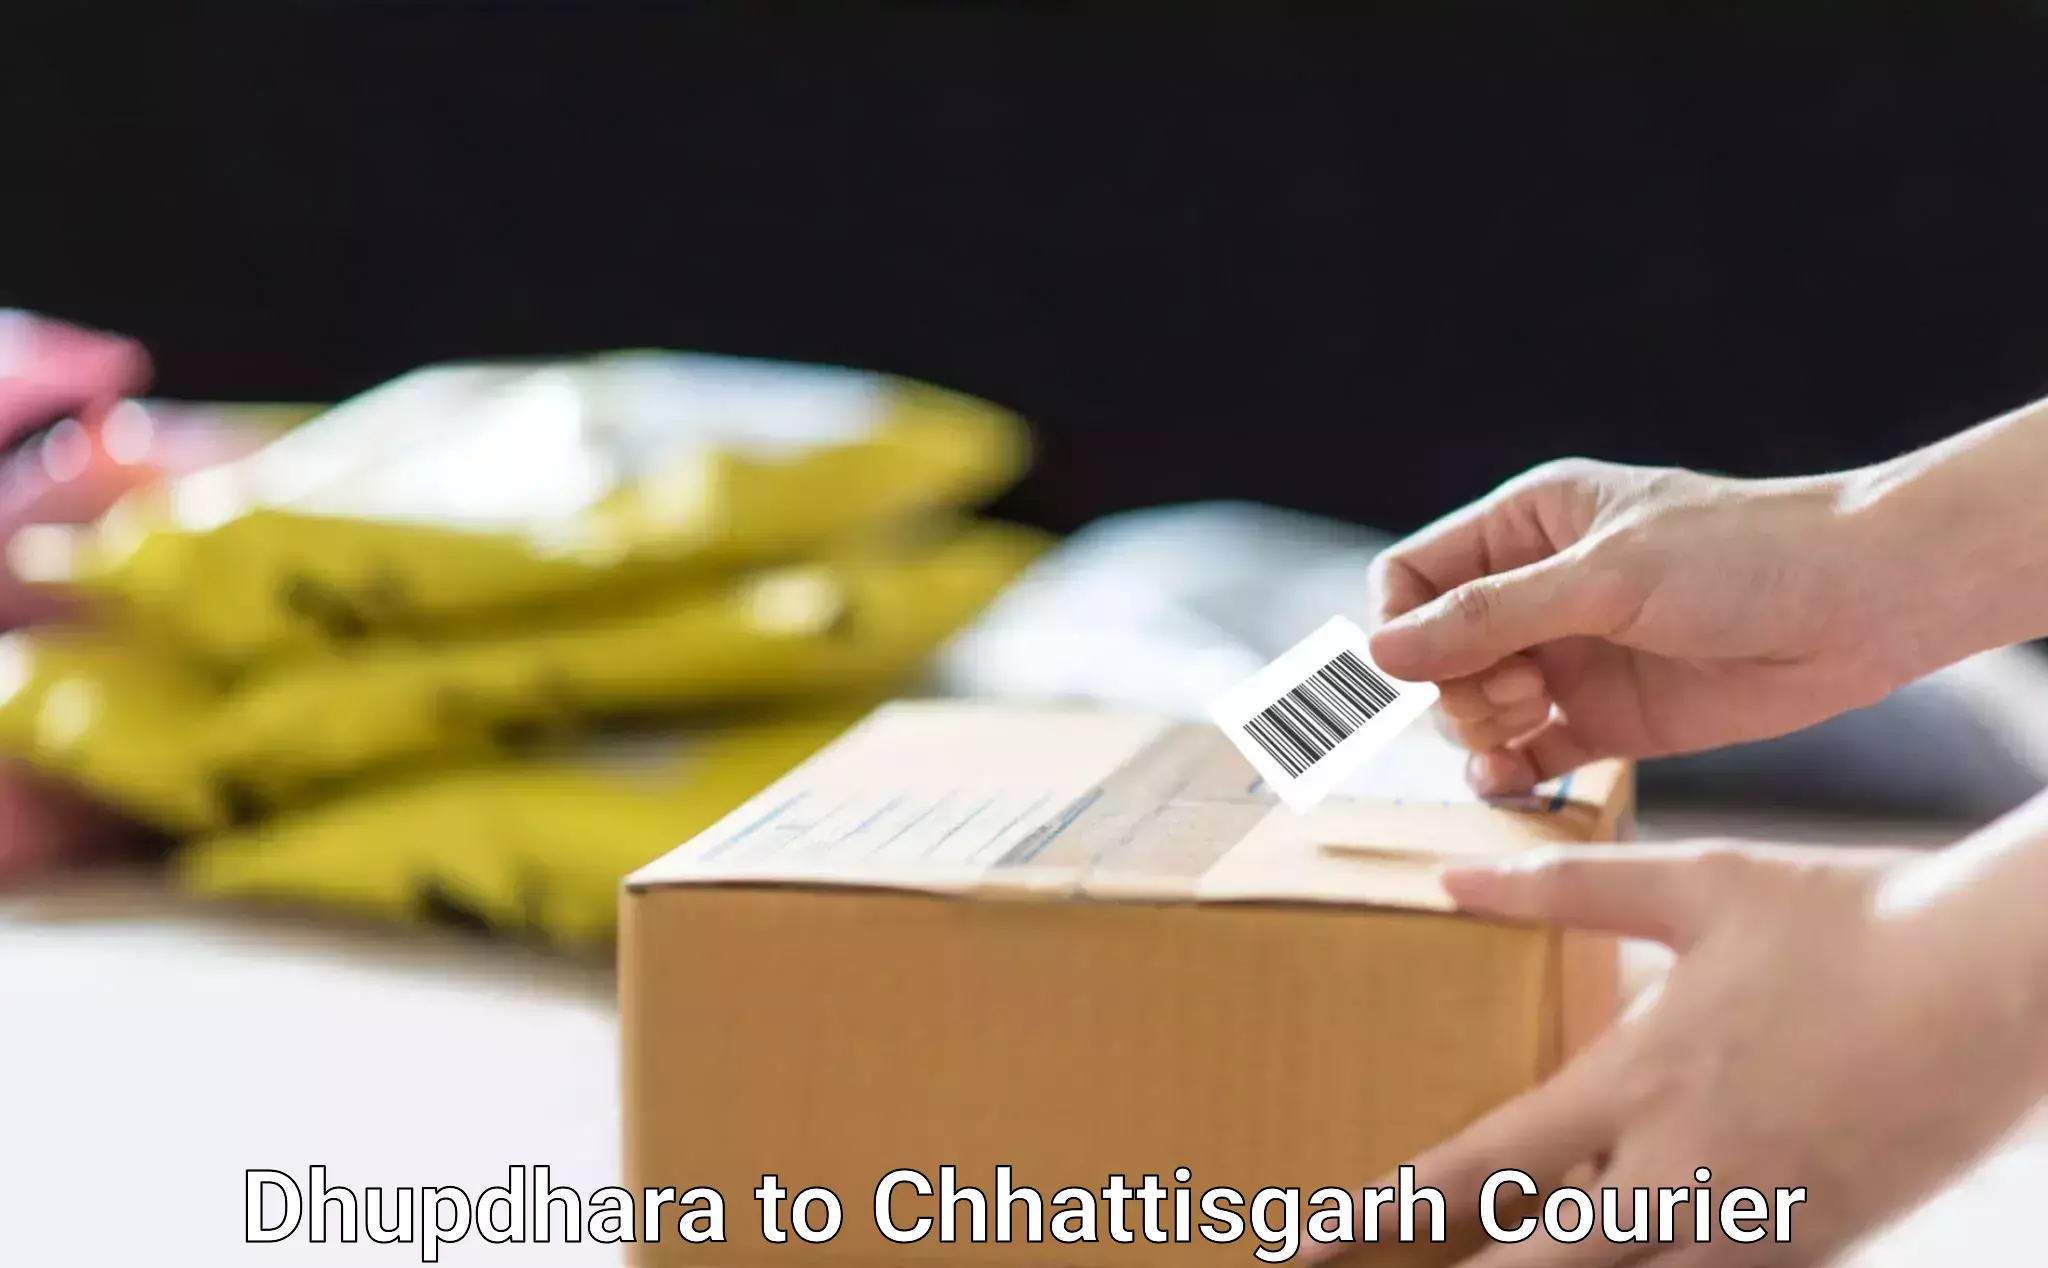 Flexible delivery scheduling Dhupdhara to Raigarh Chhattisgarh